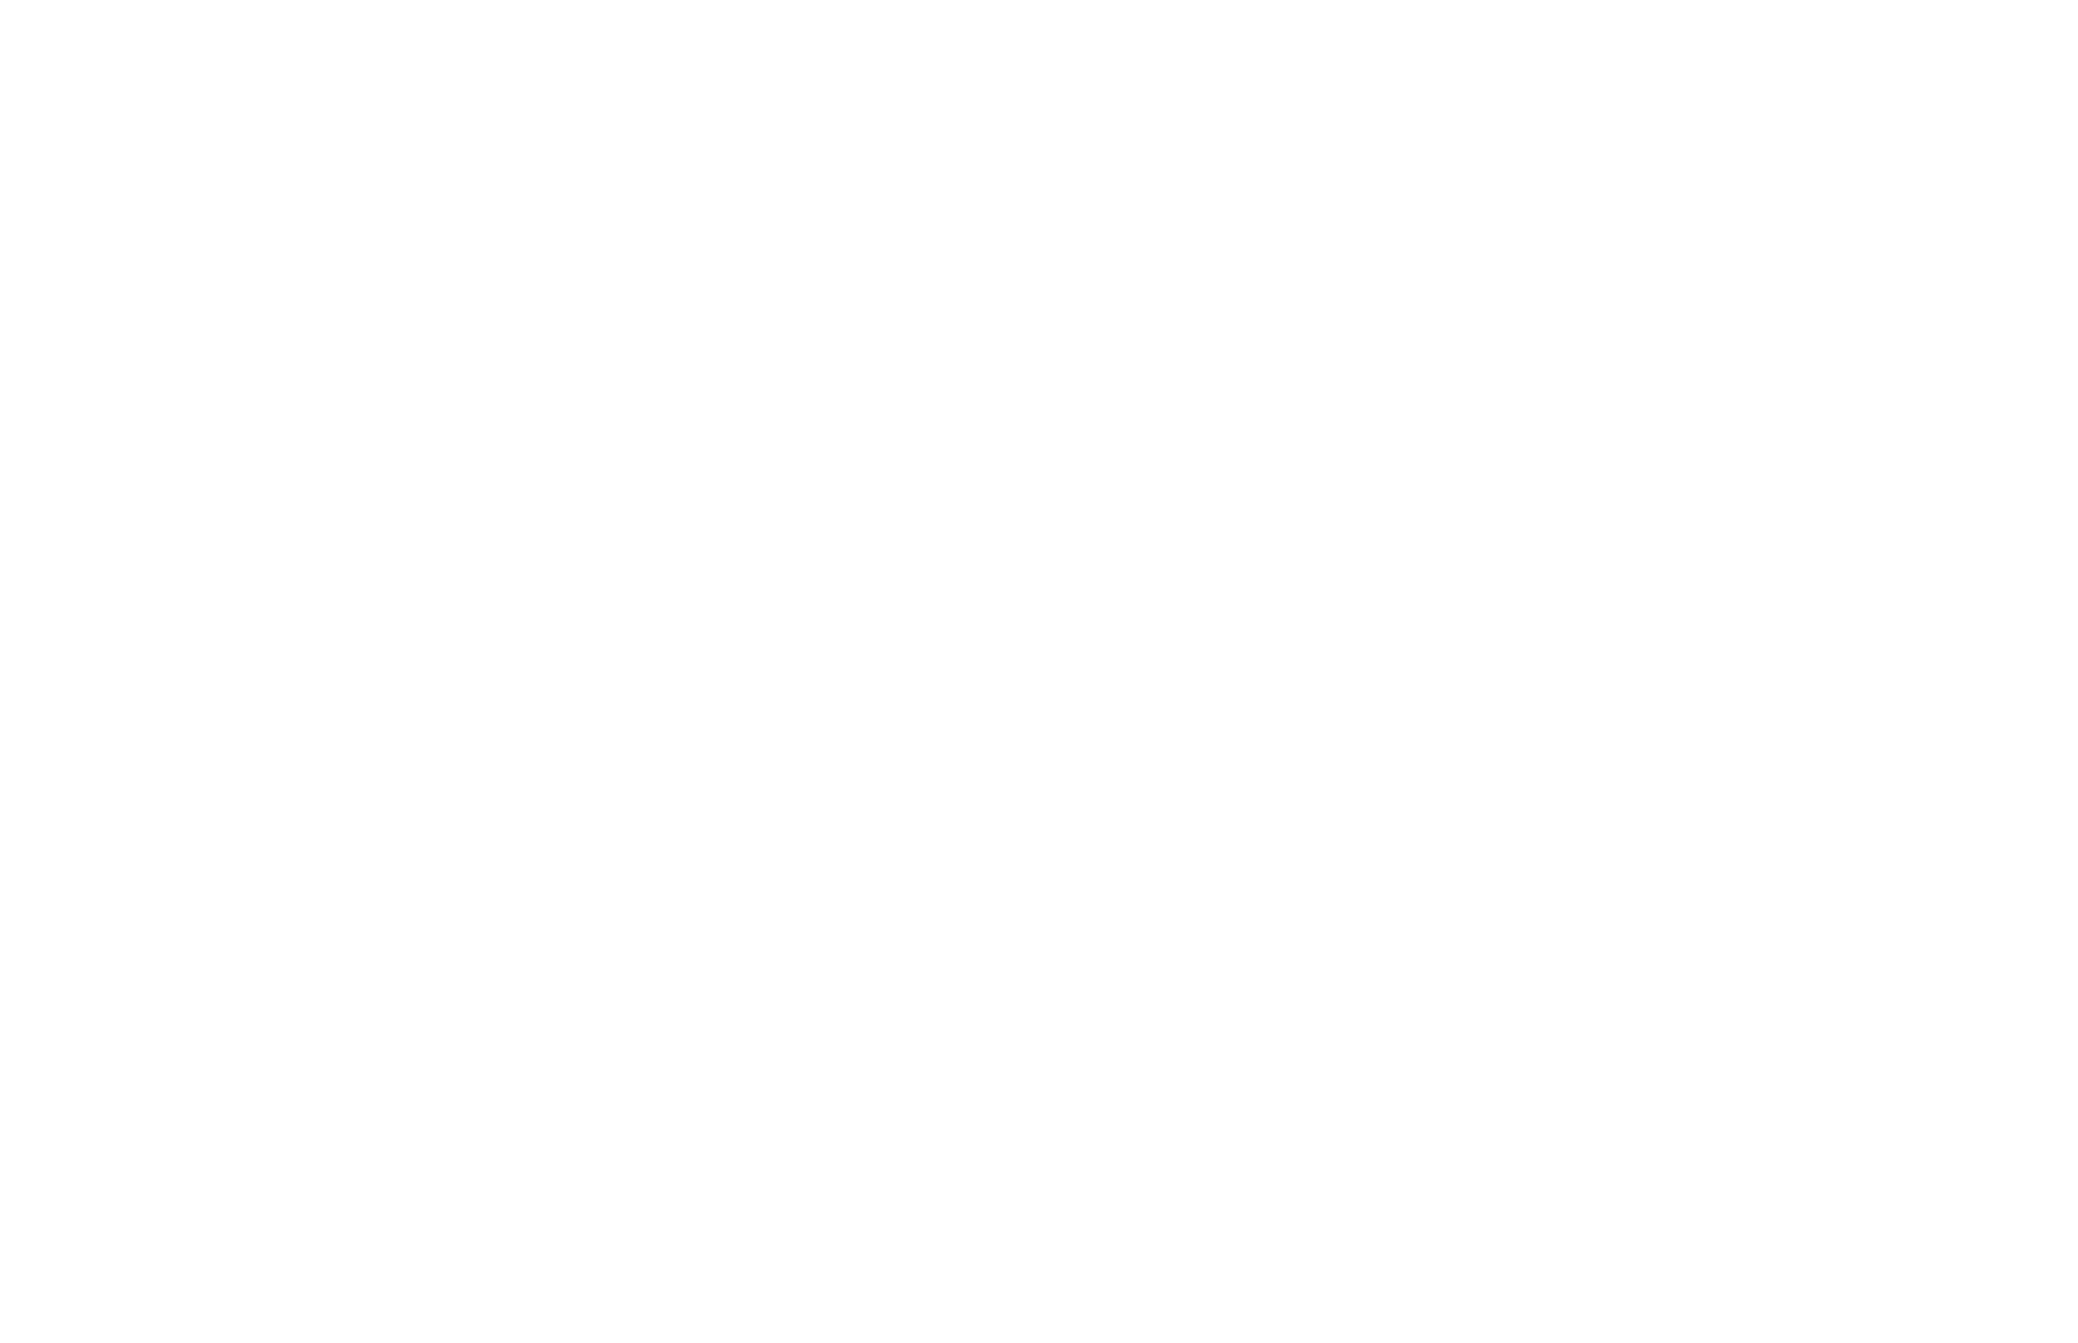 Whiskey Neat